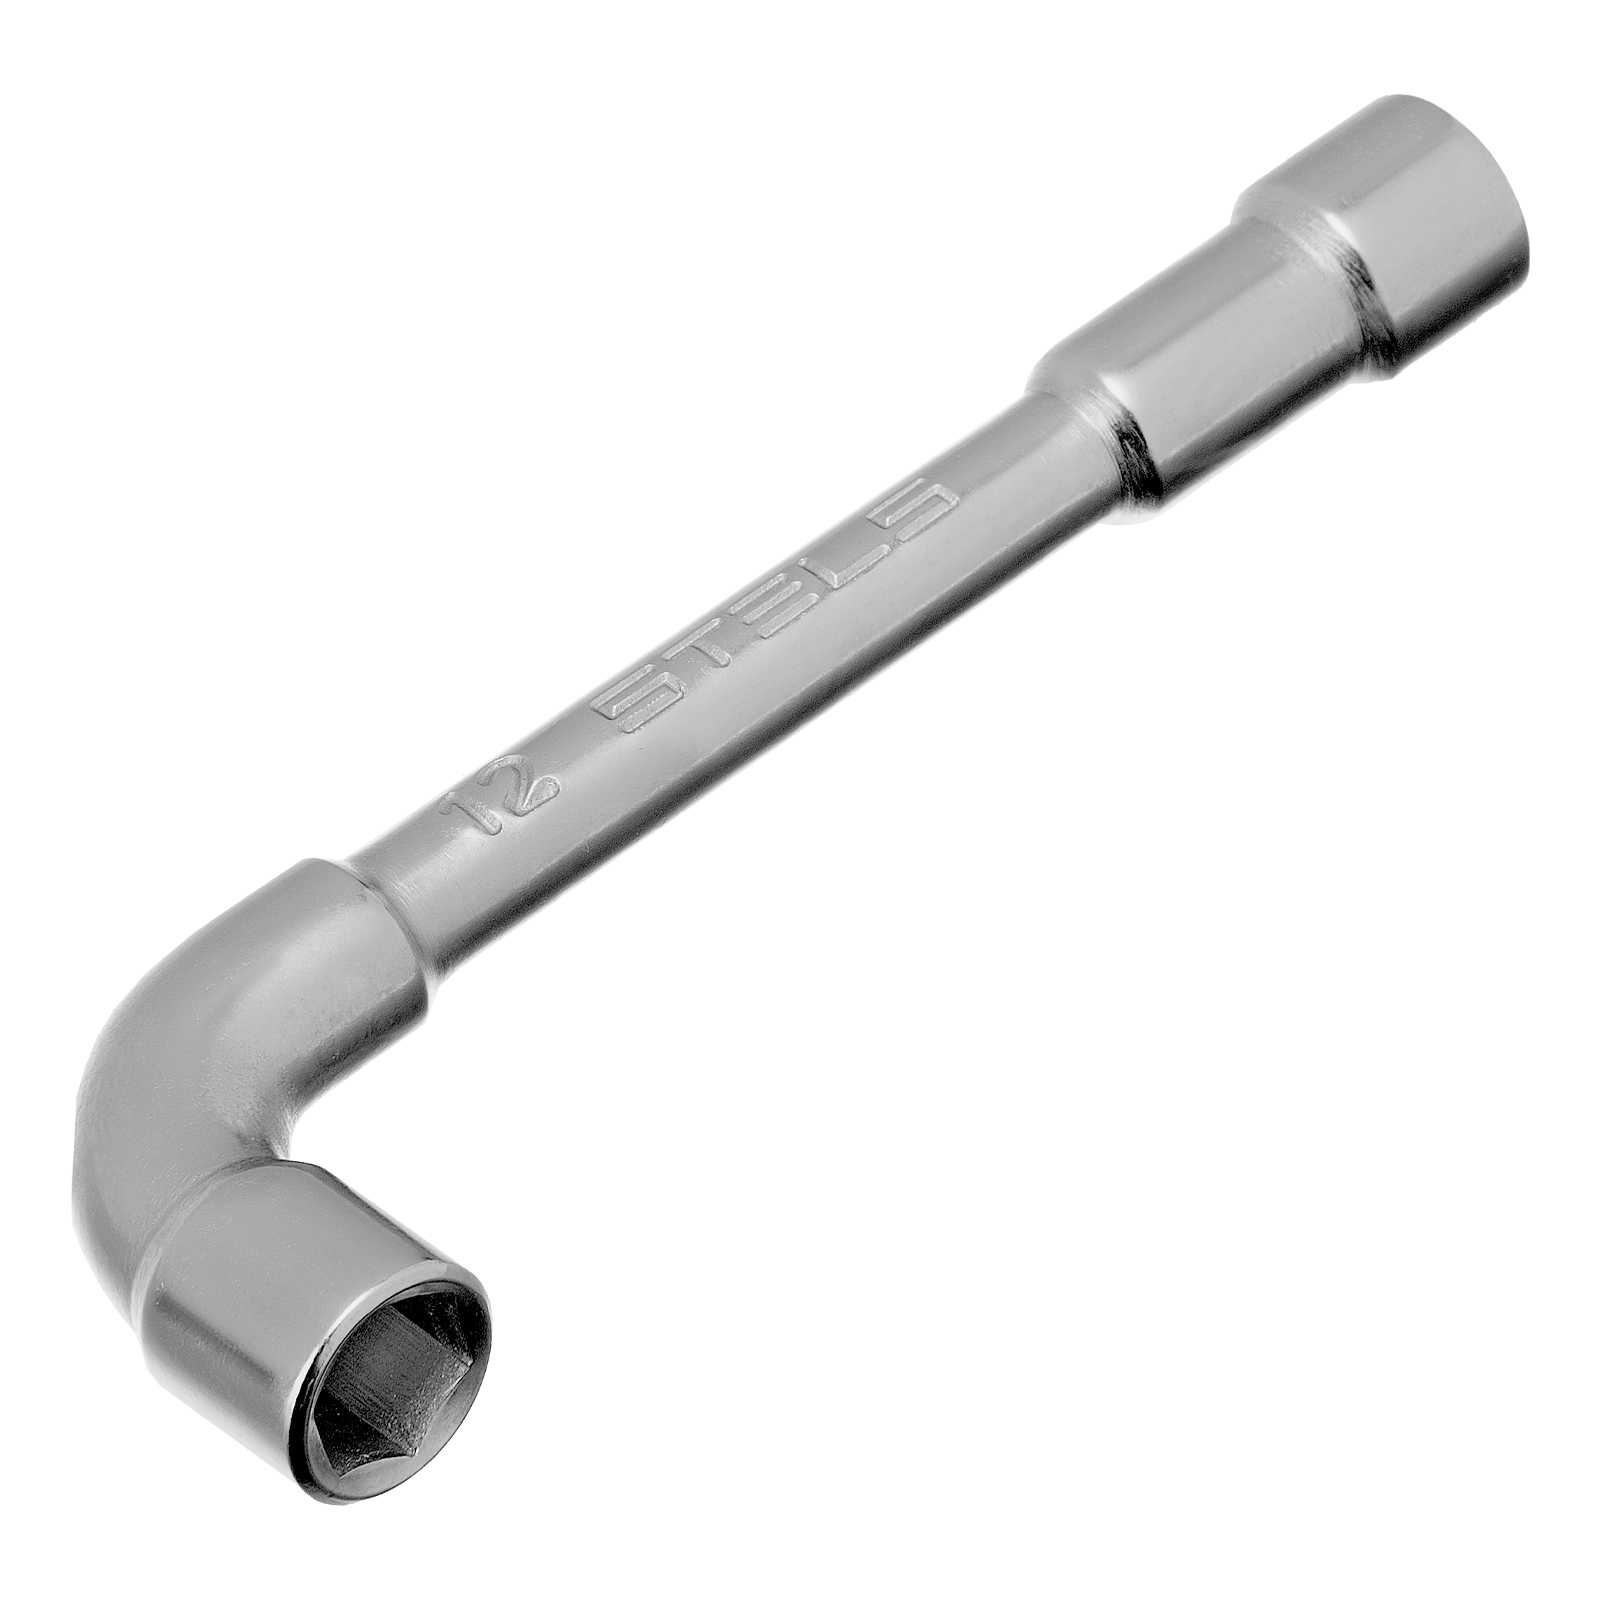 Торцевой трубчатый ключ STELS 14233 торцевой карданный ключ stels 14125